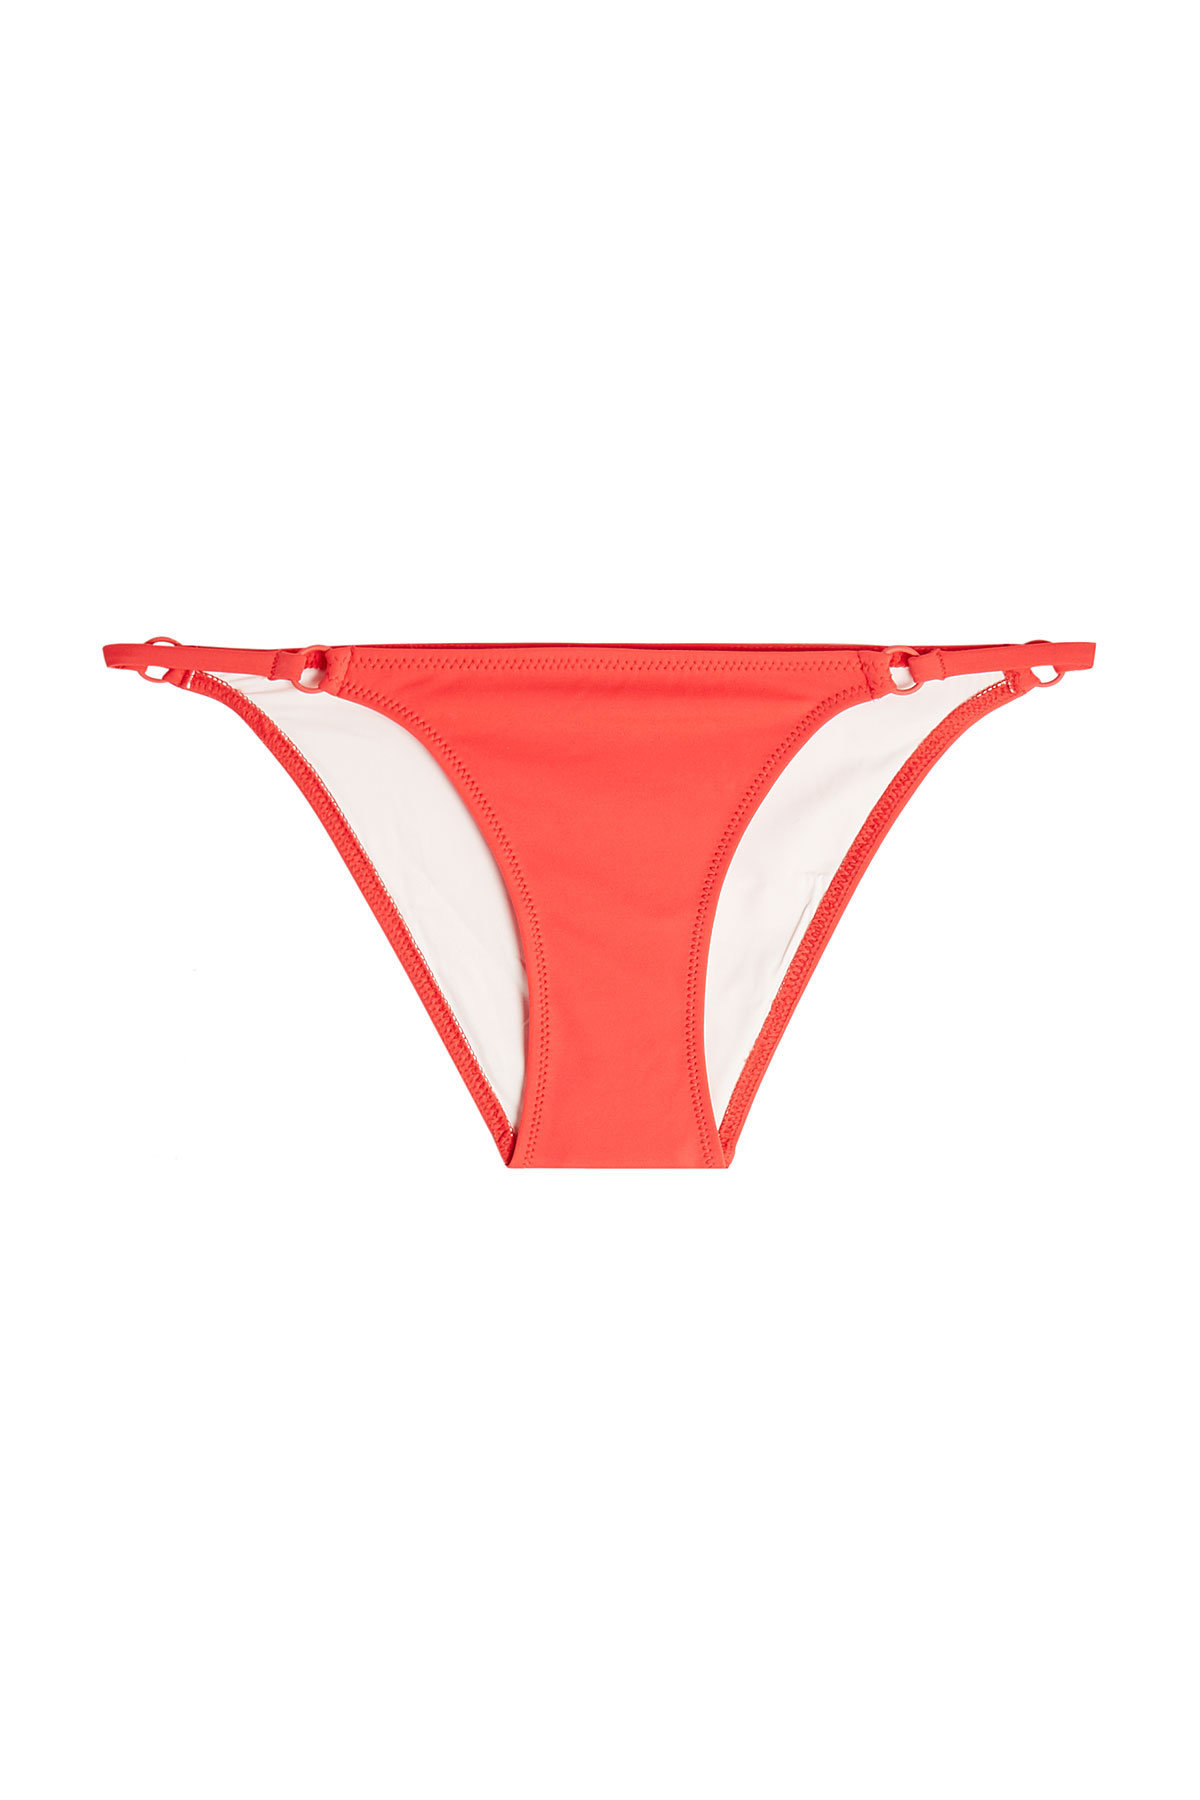 The Tilda Bikini Bottoms by Solid & Striped